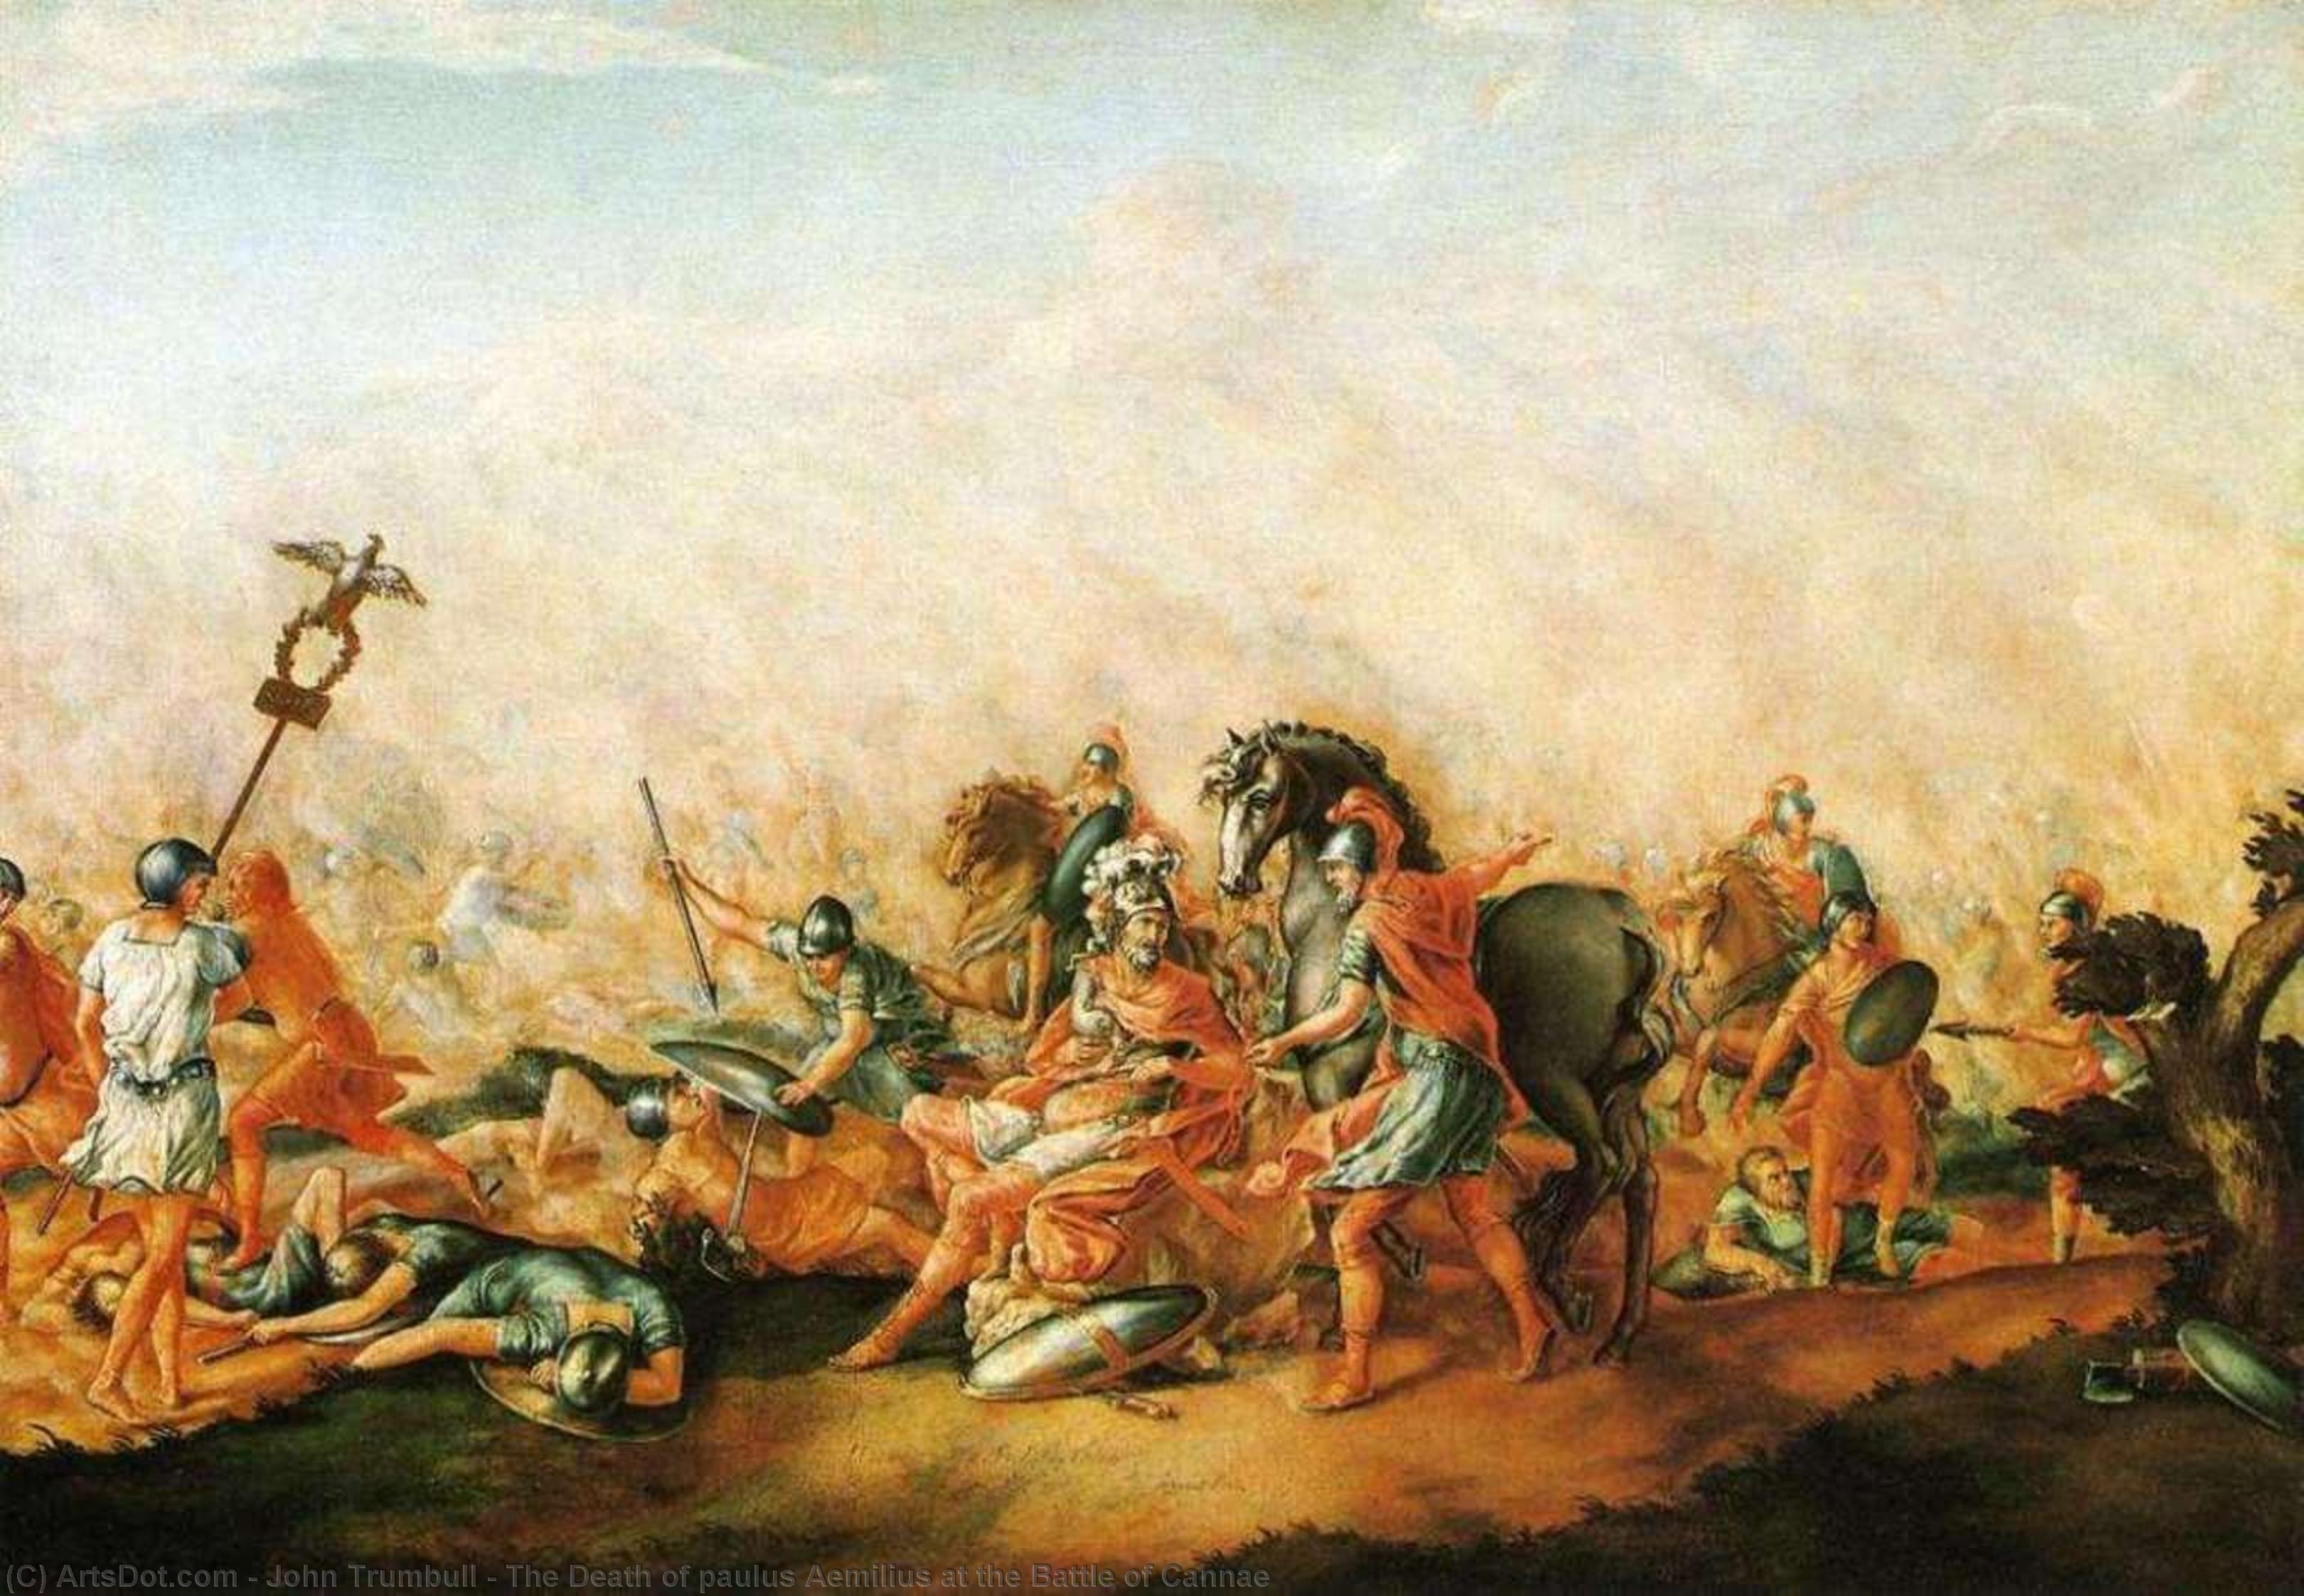 WikiOO.org - Enciclopédia das Belas Artes - Pintura, Arte por John Trumbull - The Death of paulus Aemilius at the Battle of Cannae